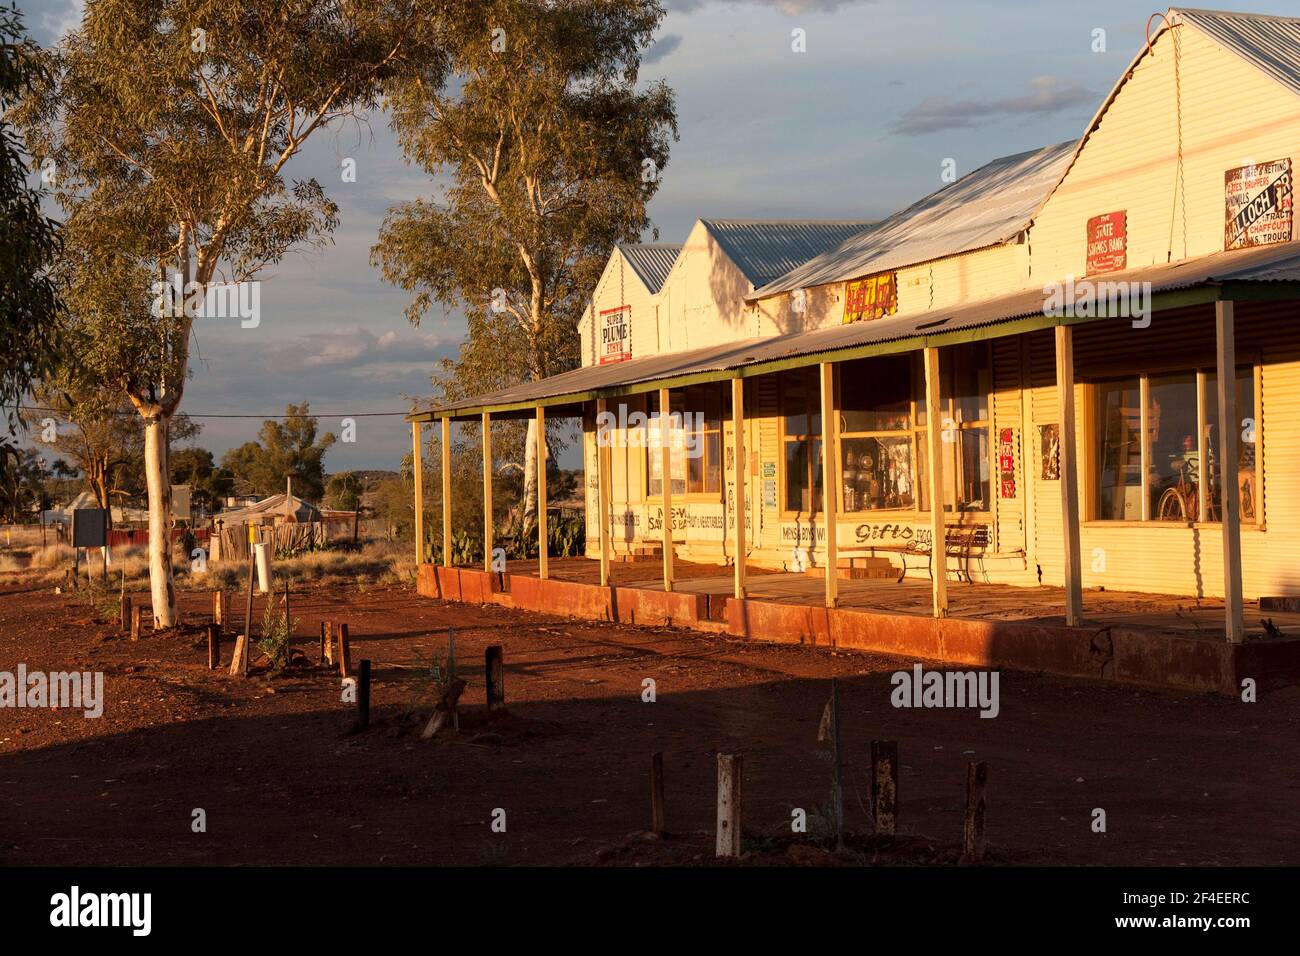 Corrugated iron shops of the historical gold mining town, Gwalia, Leonora Western Australia Stock Photo